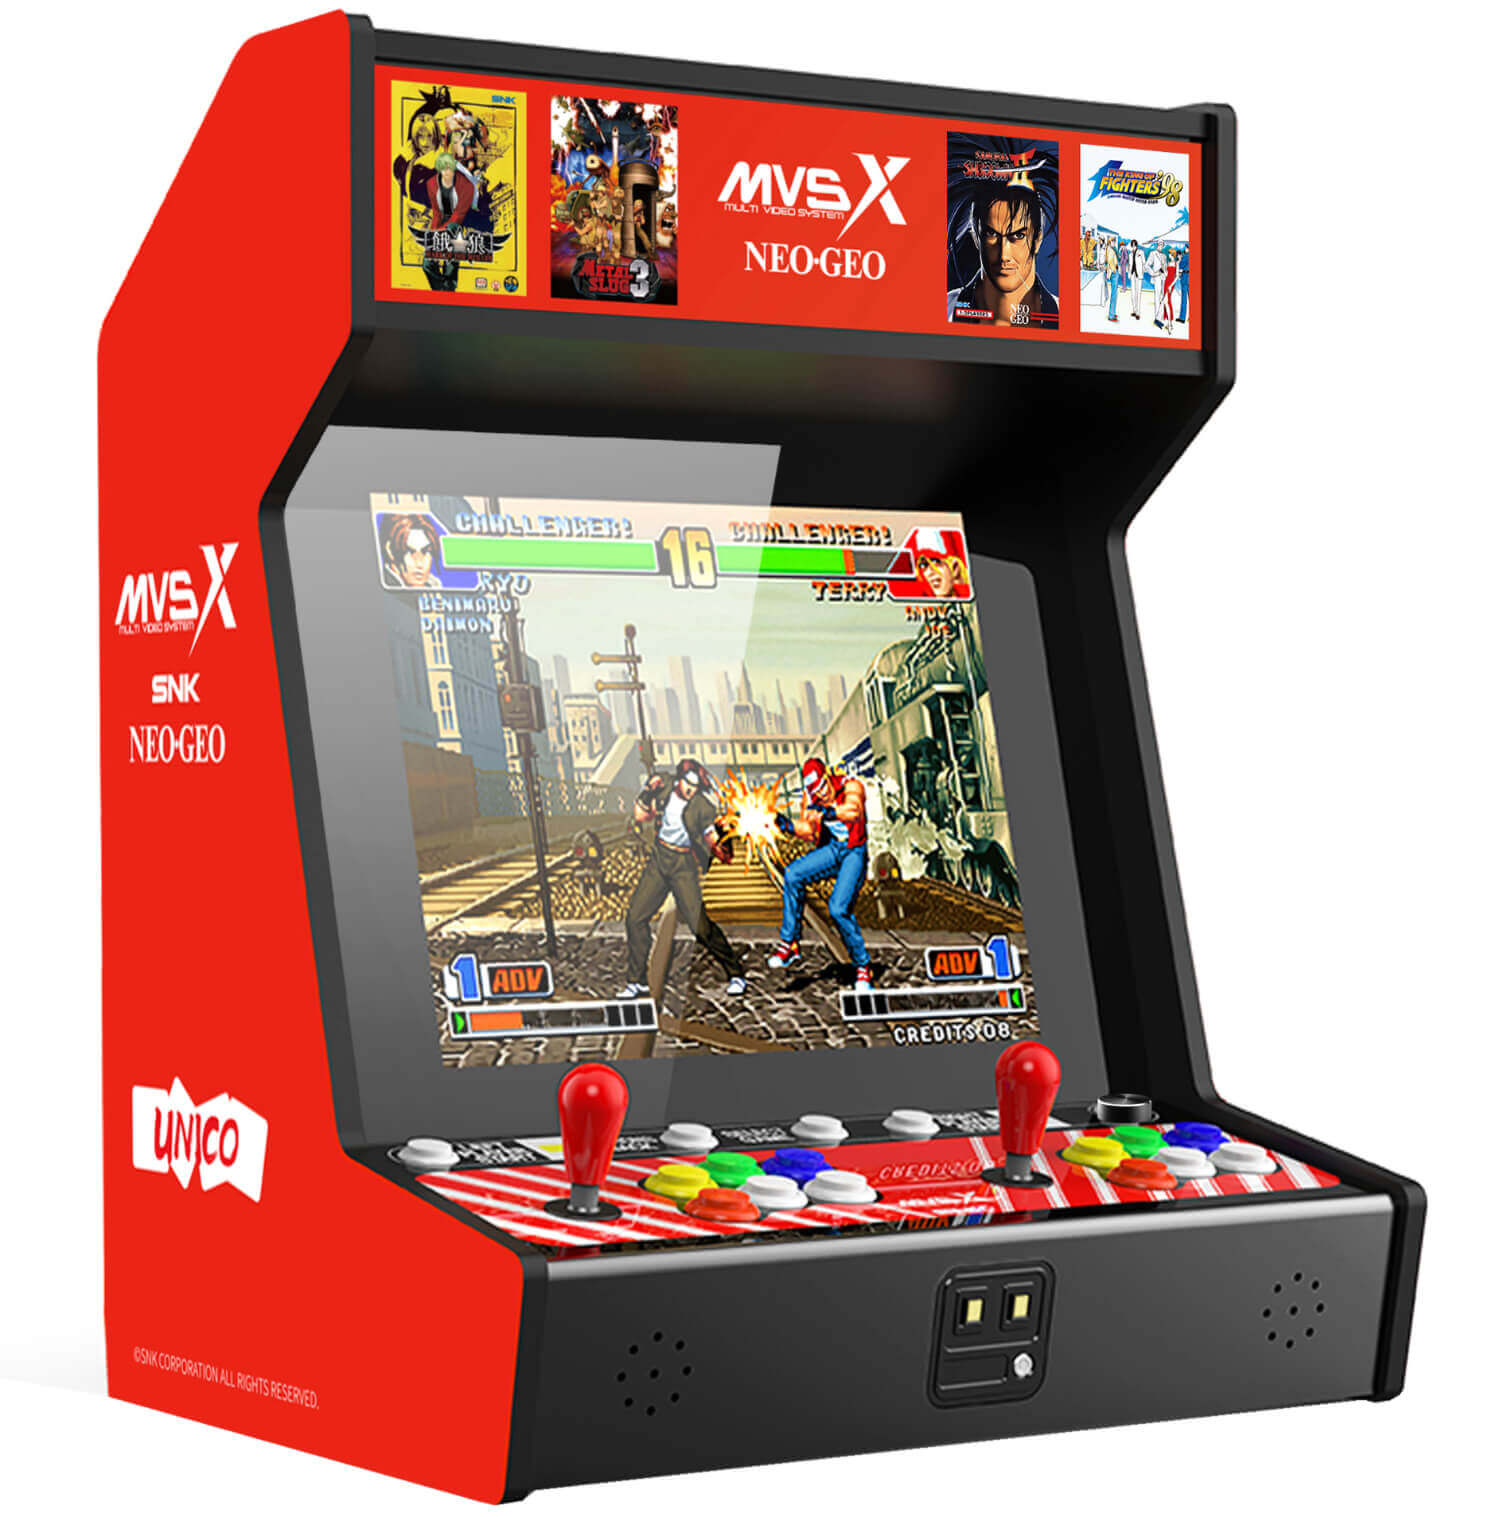 SNK NeoGeo MVSX Multi Game Arcade Machine | Liberty Games